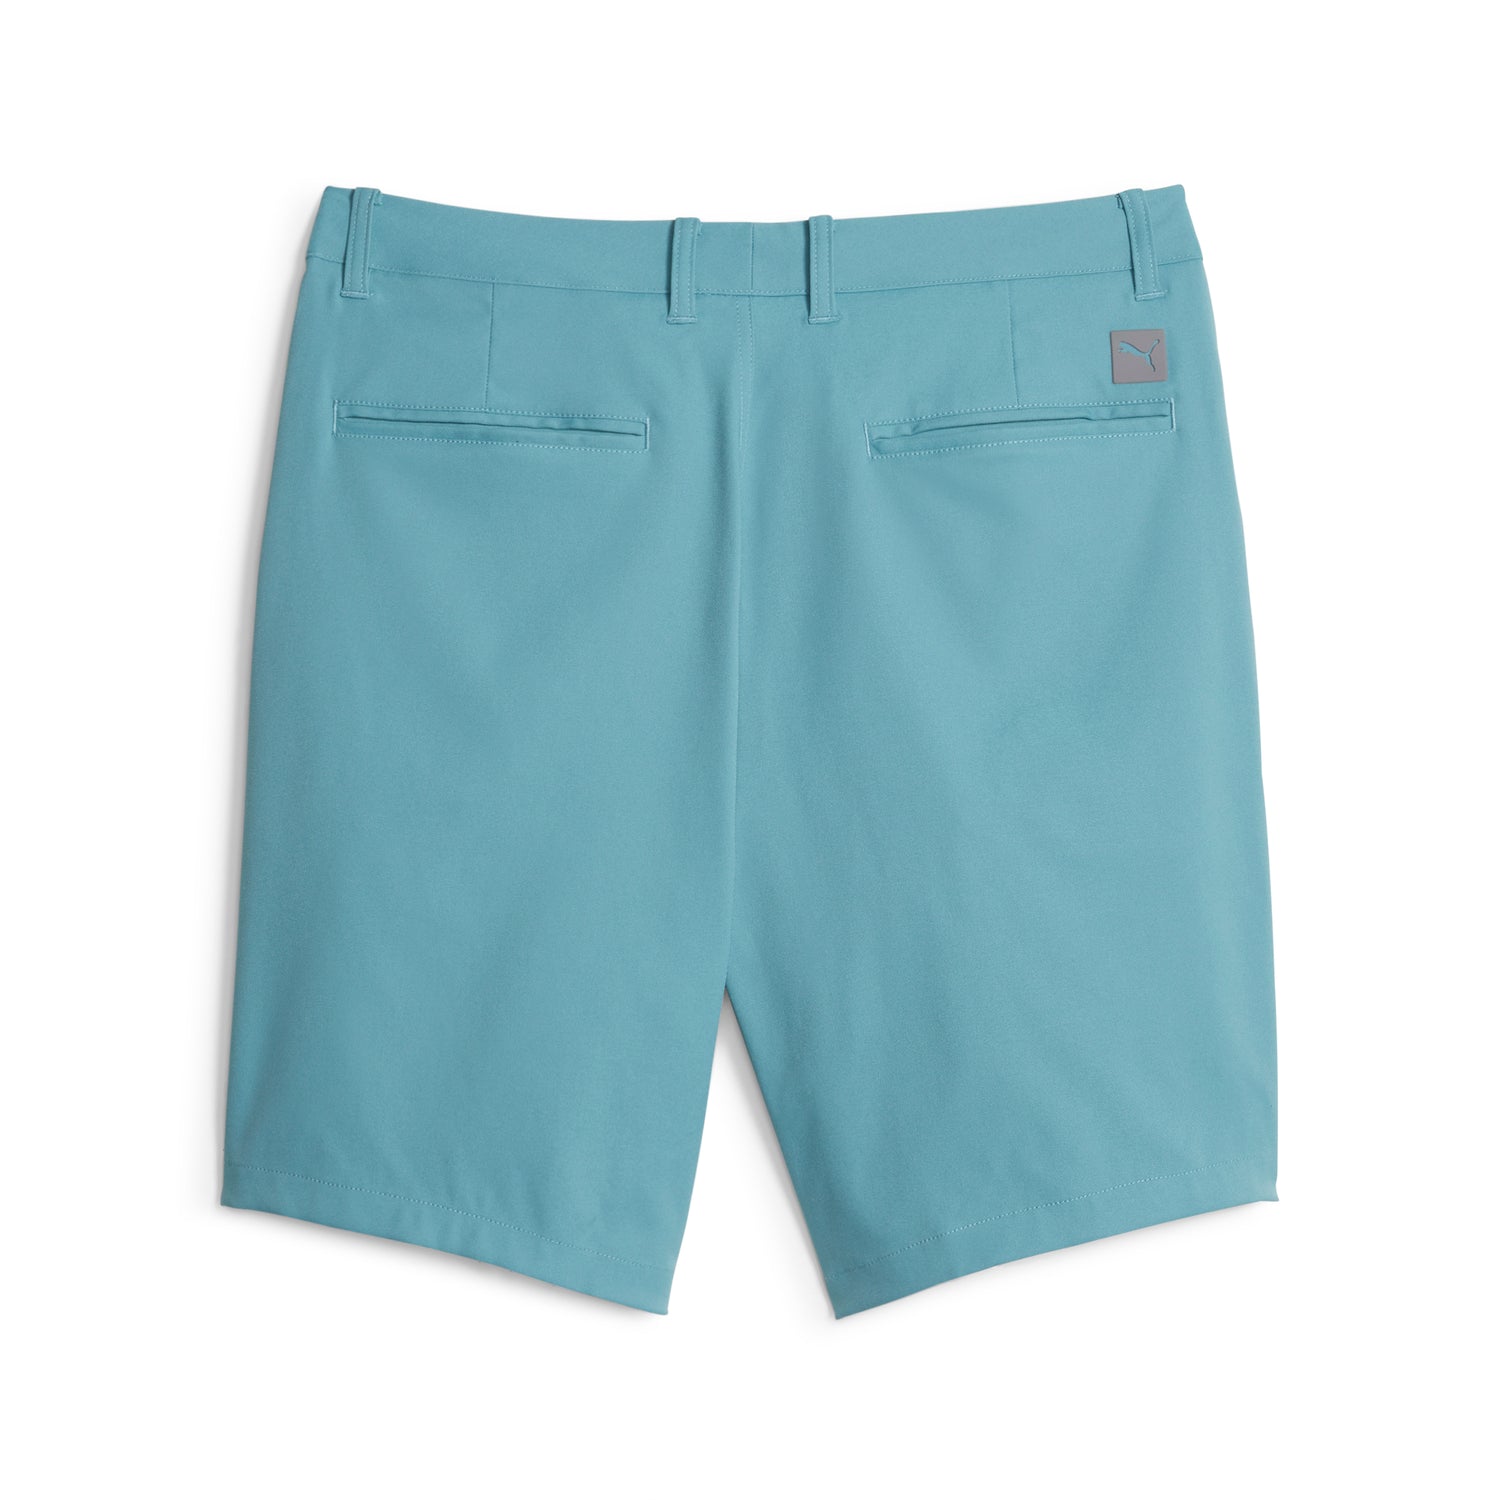 Dealer 10 Golf Shorts | Regal Blue